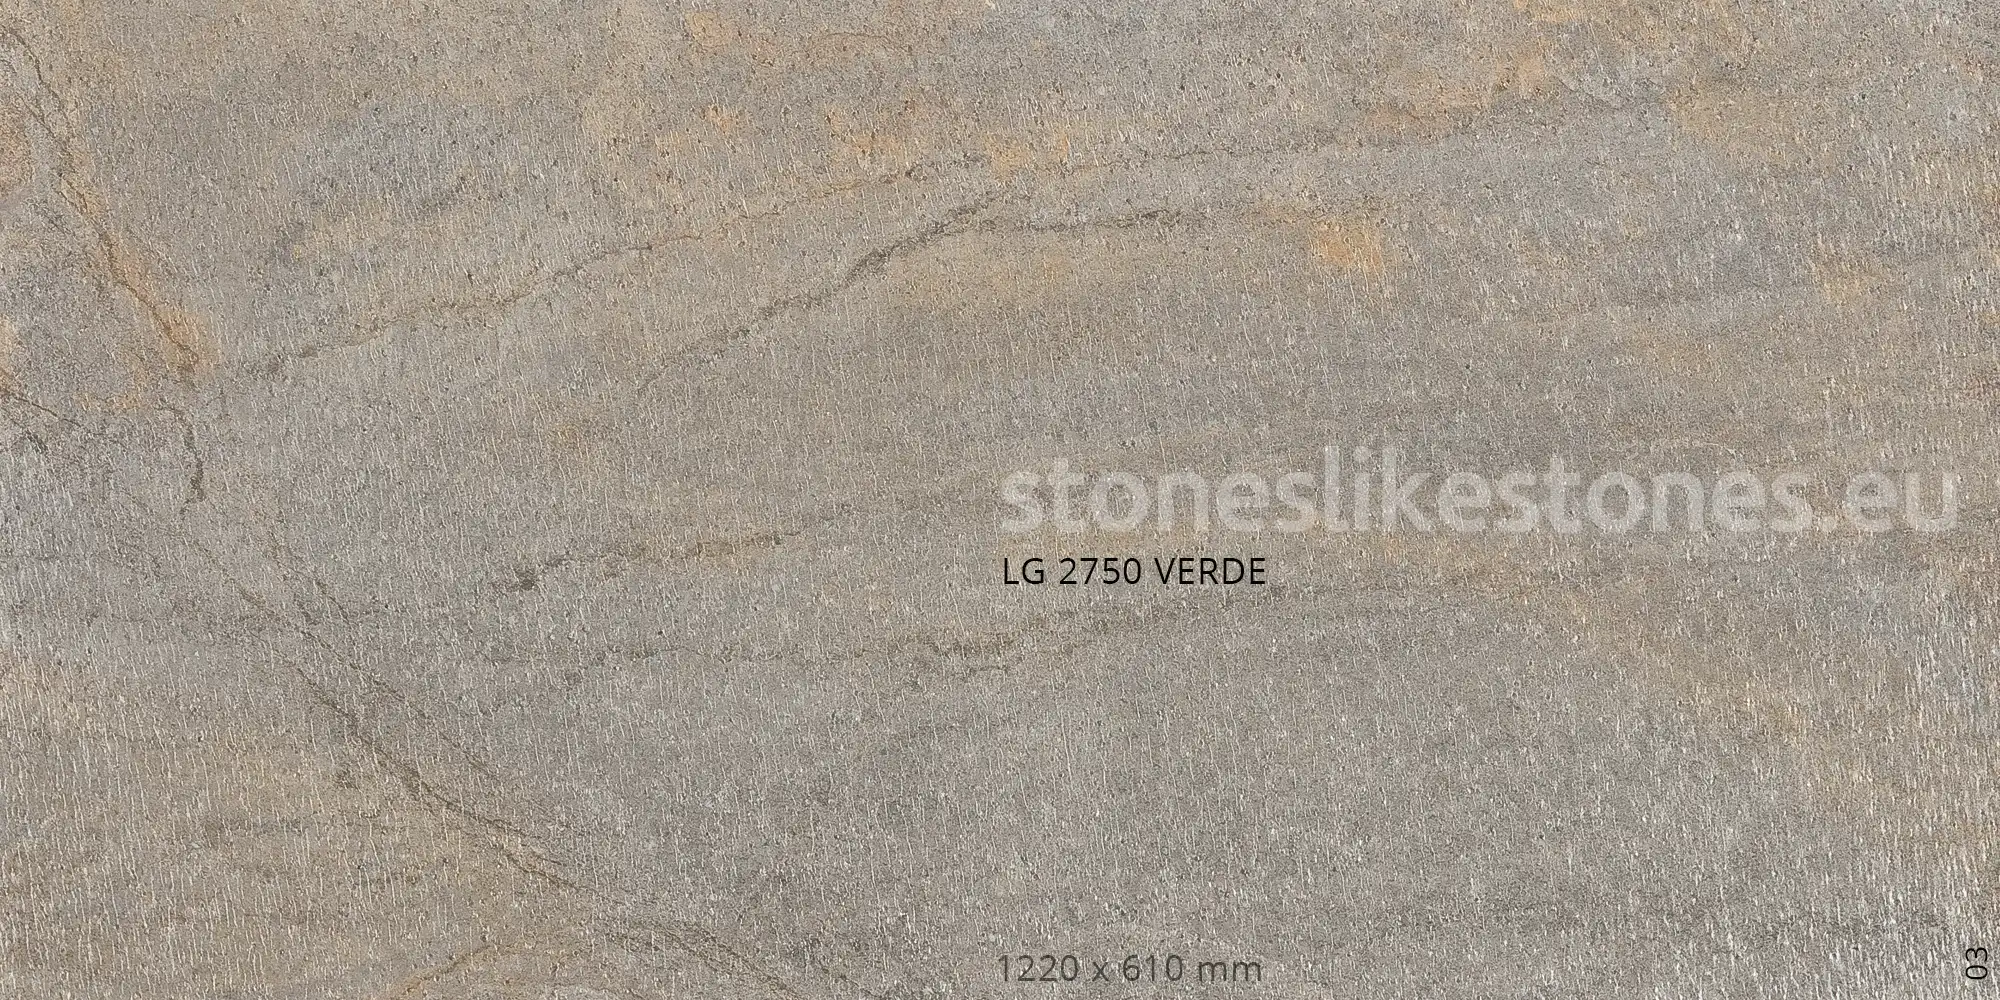 StoneslikeStones Dünnschiefer LG 2750 VERDE Glimmerschiefer Abb 03 – Download mit Rechtsklick